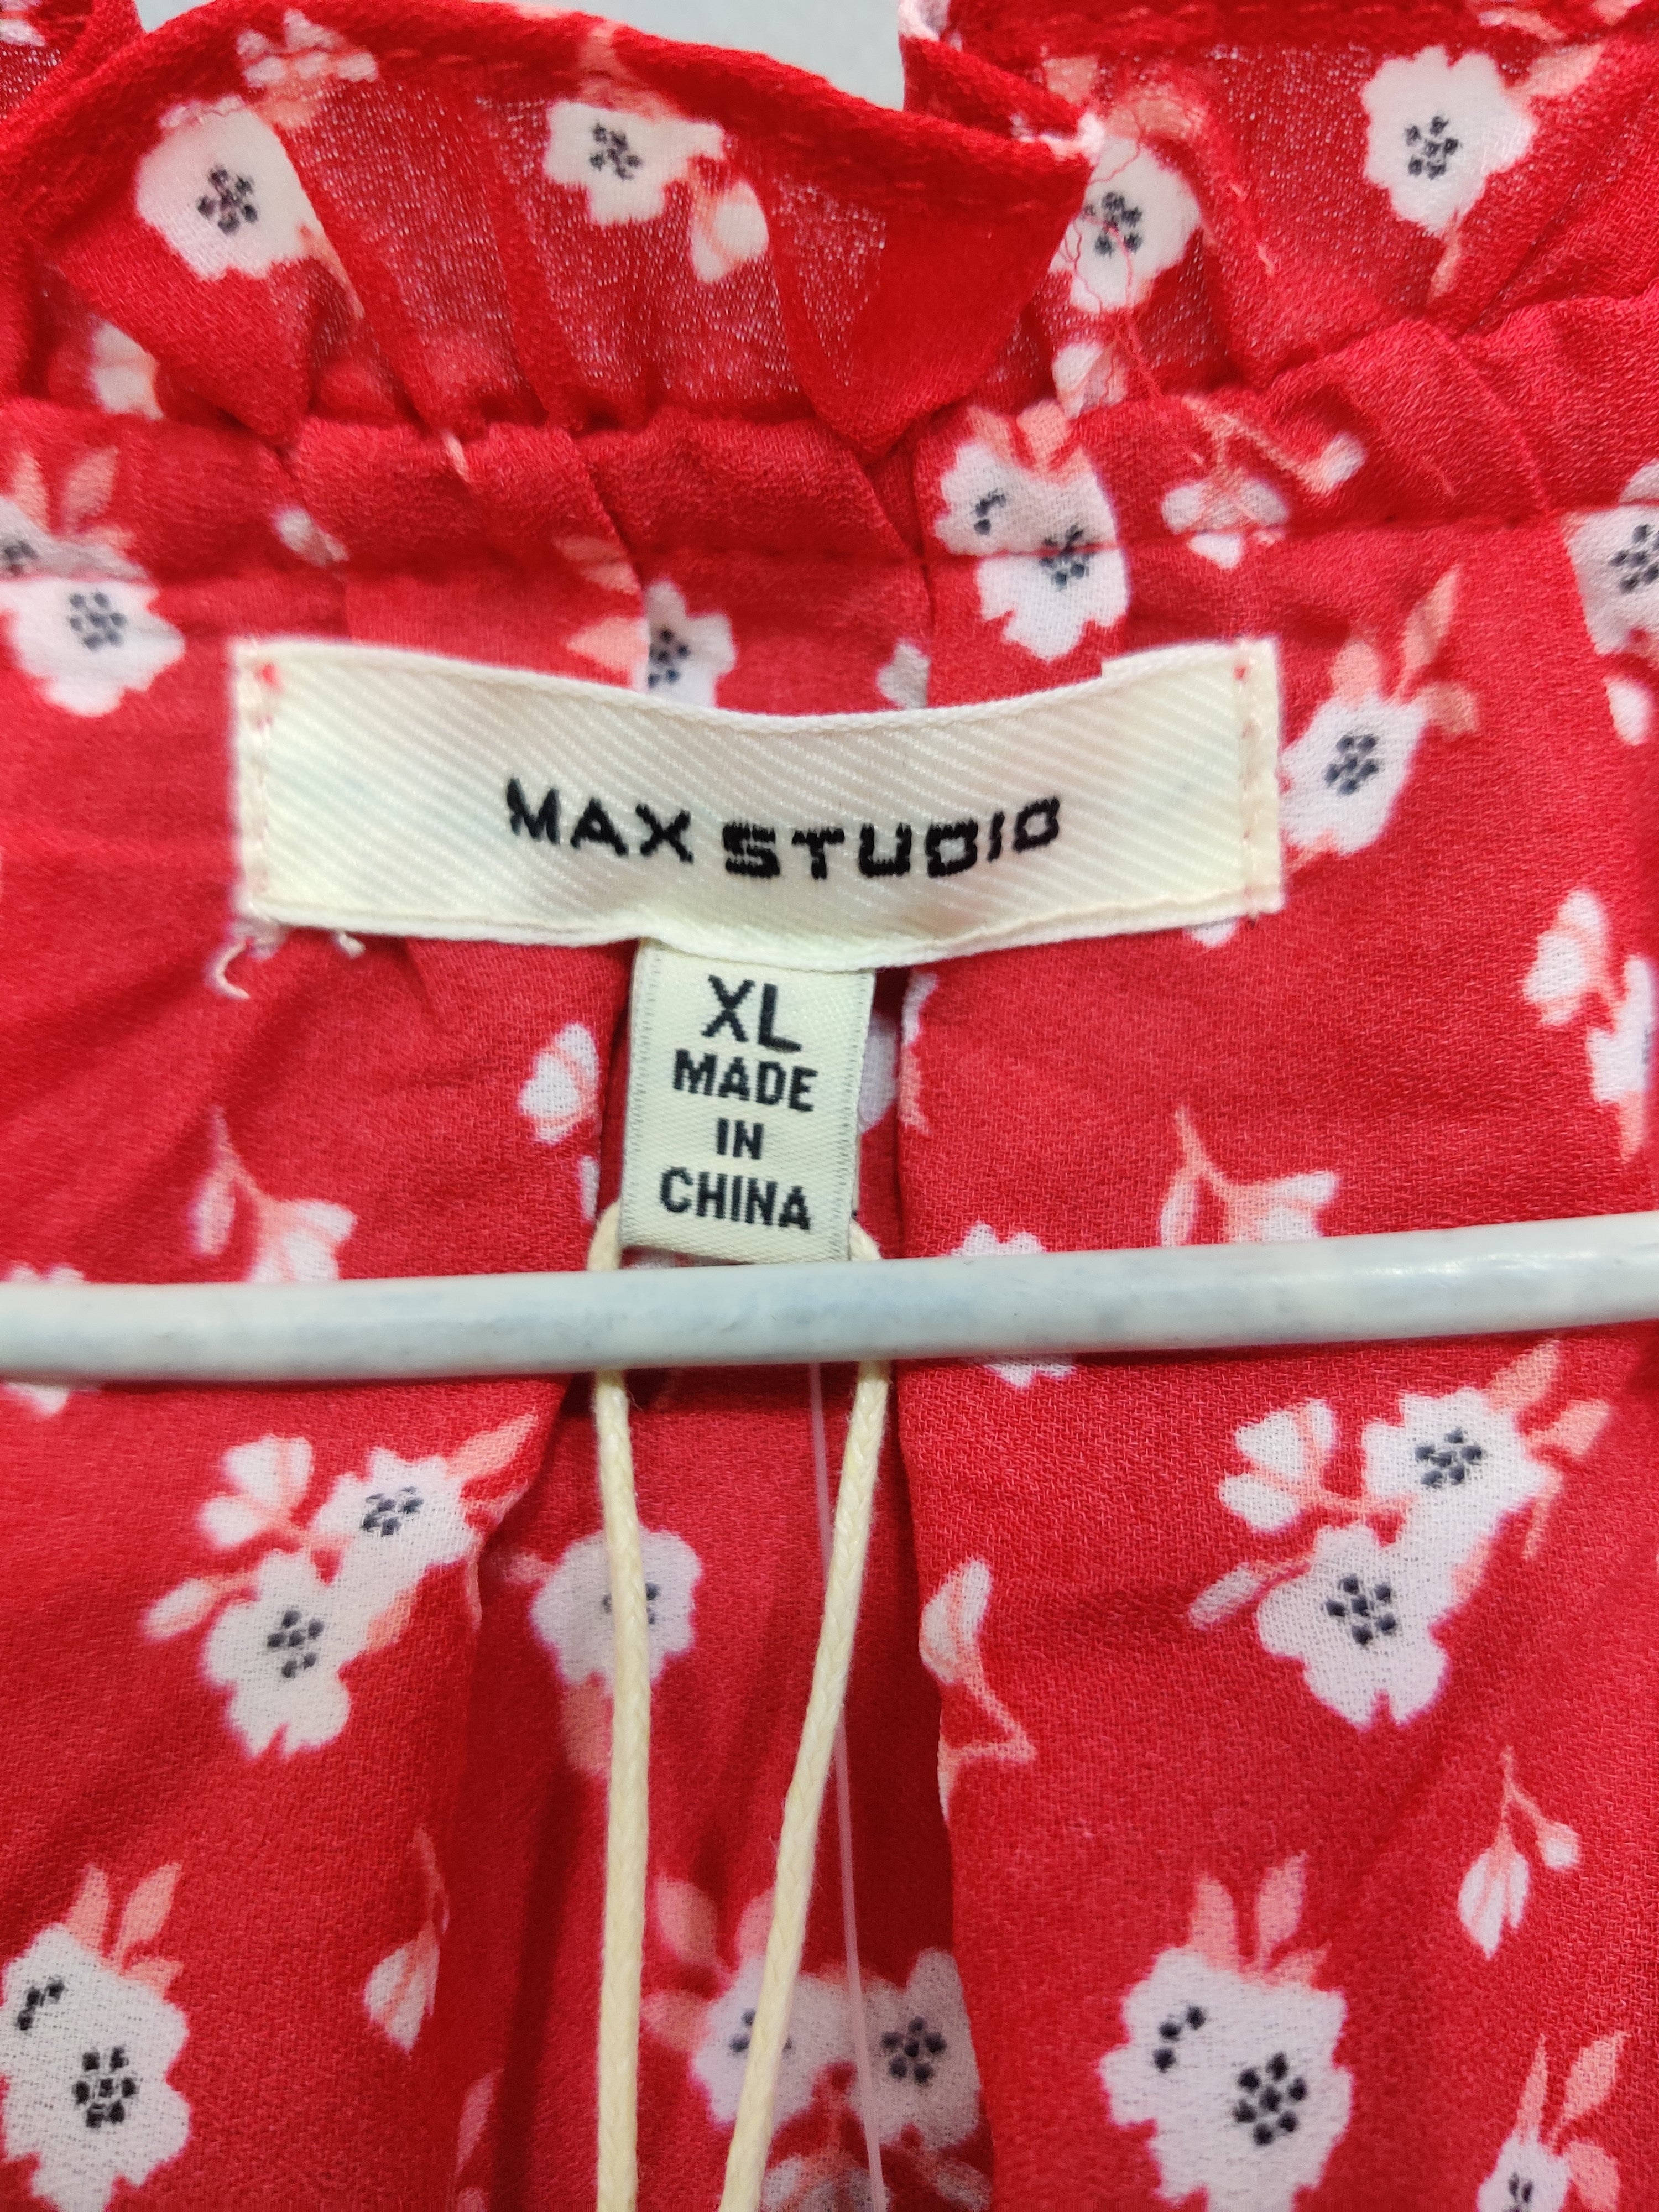 Max Studio Branded Original Cotton For Women Tops